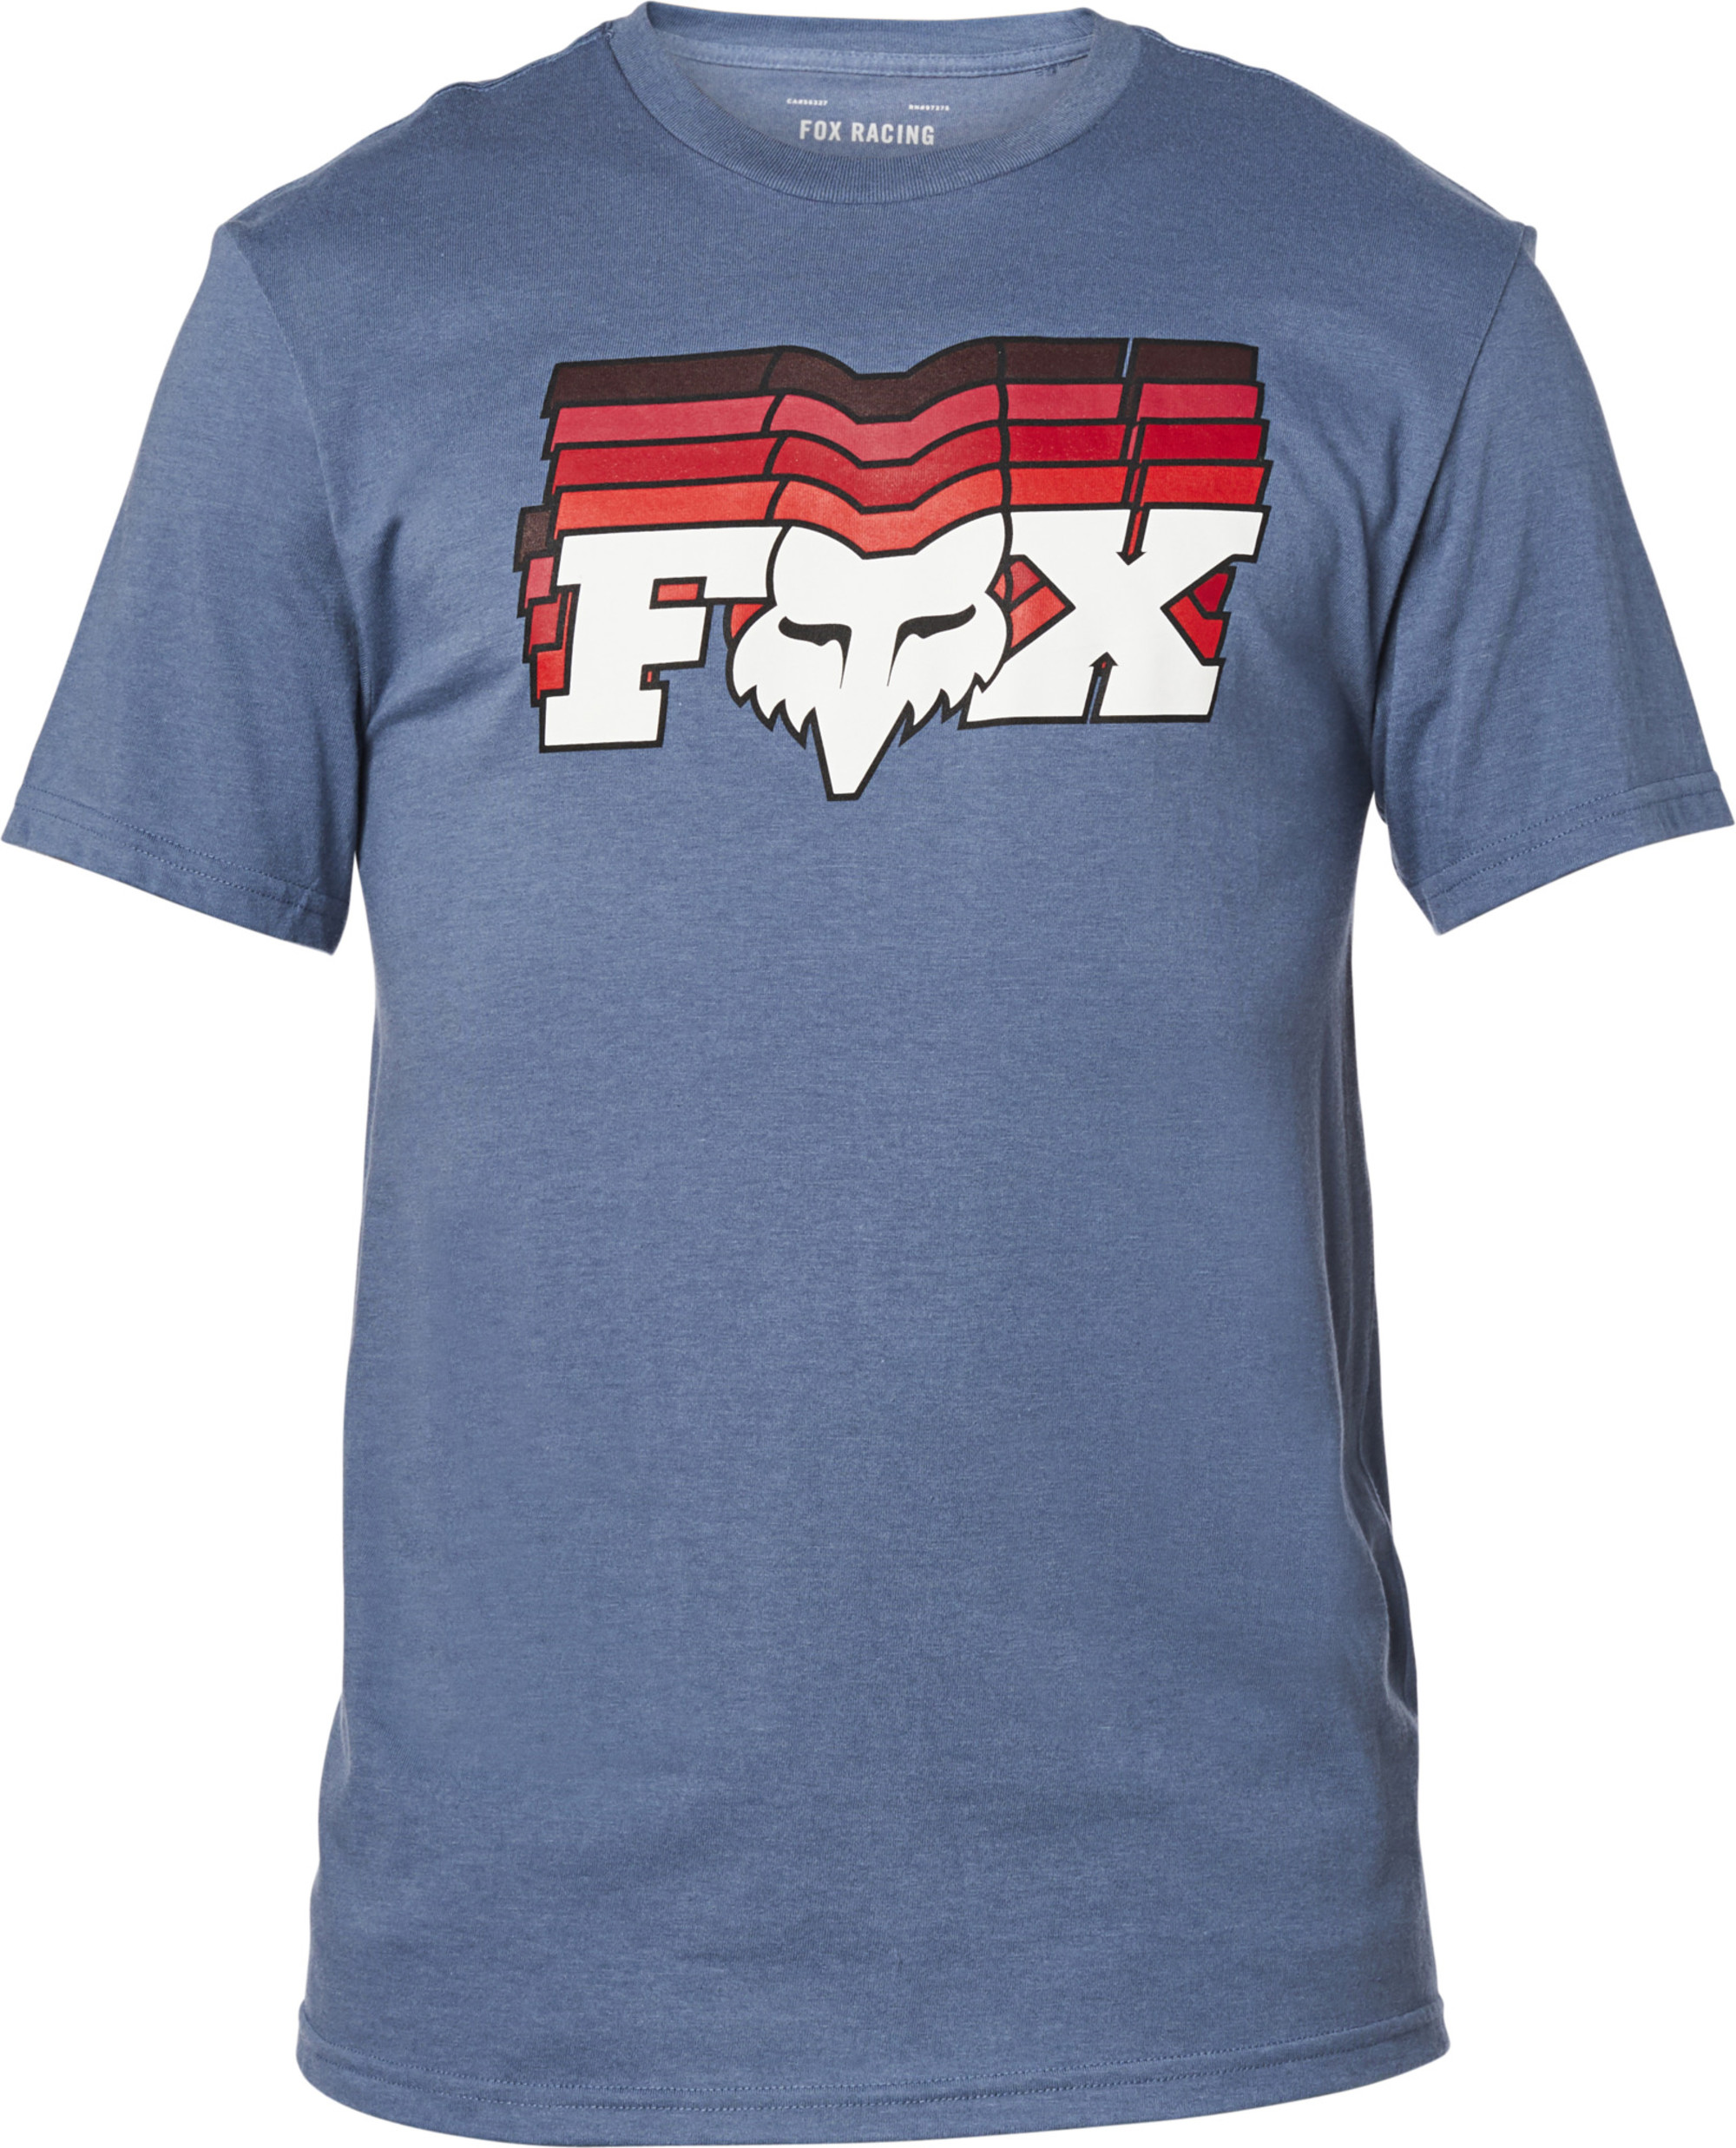 fox racing t-shirt shirts for men off beat